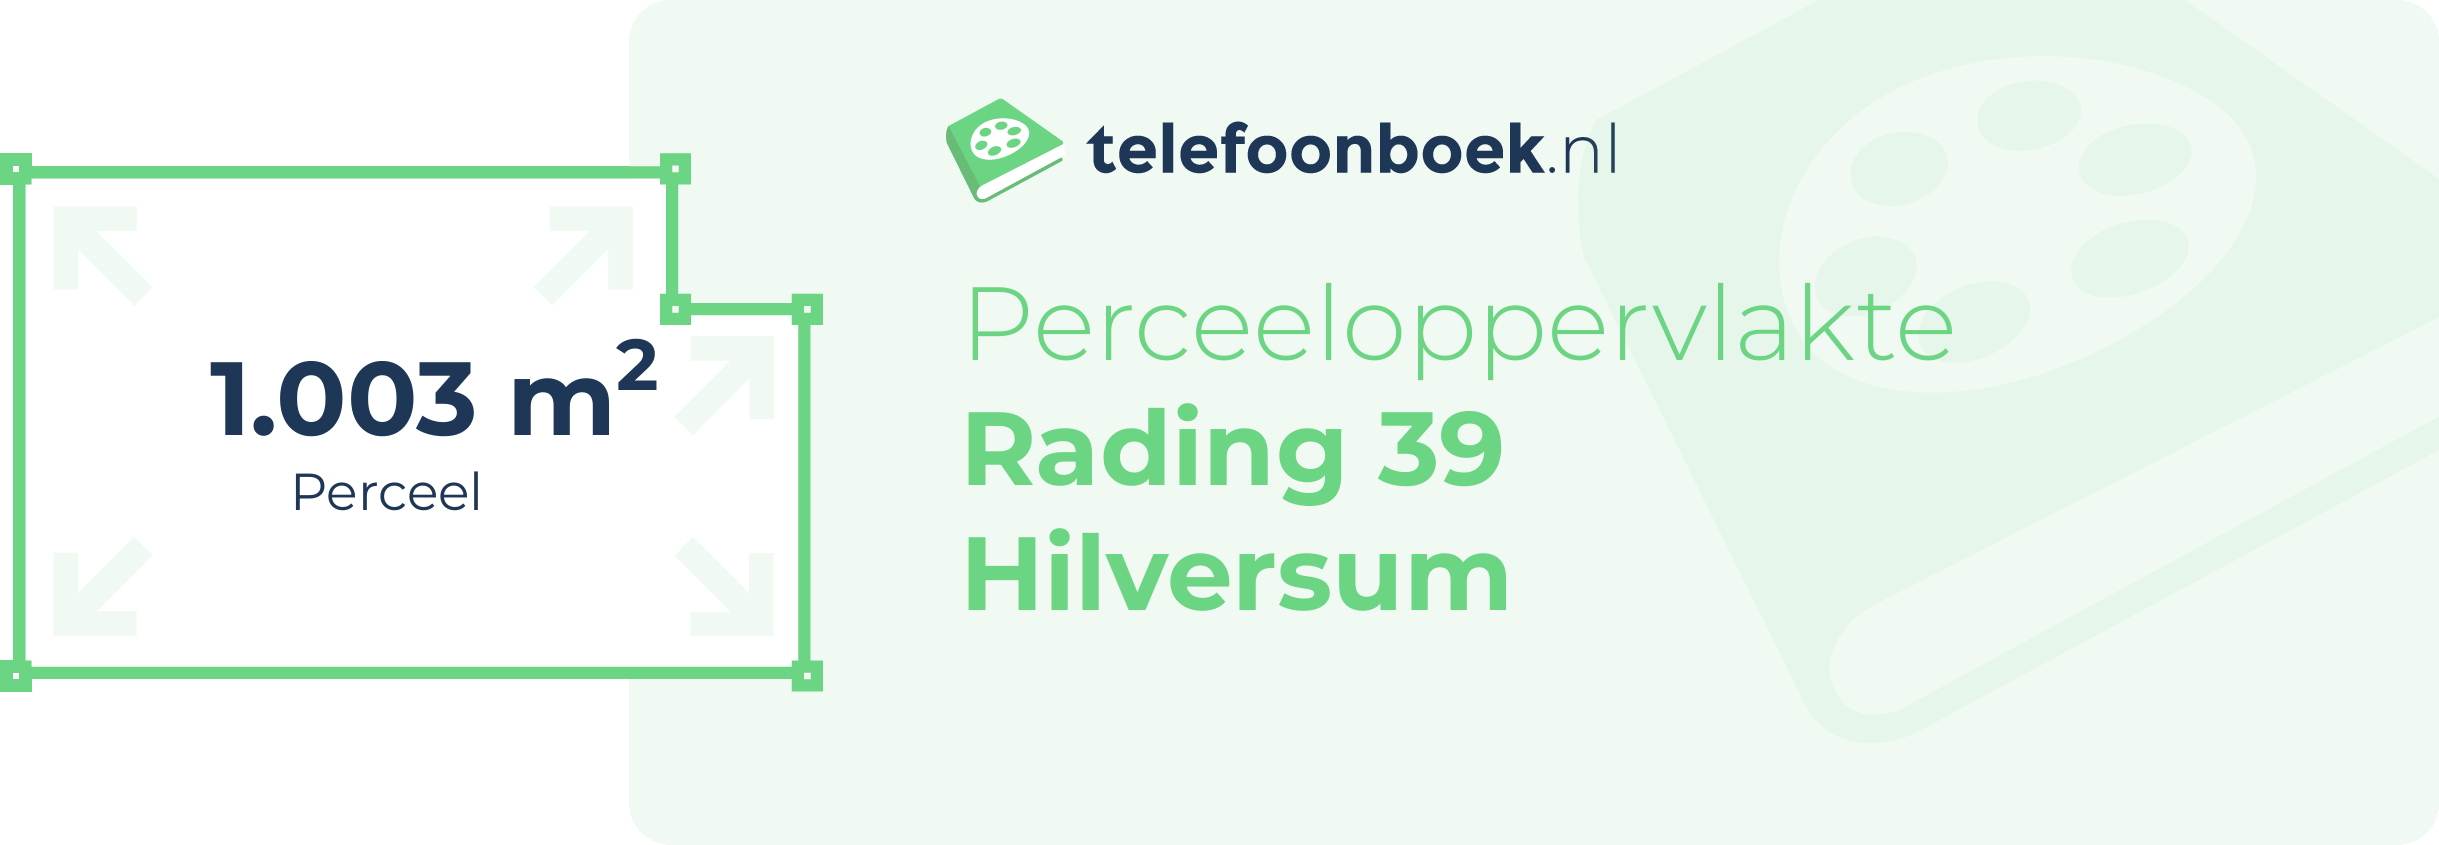 Perceeloppervlakte Rading 39 Hilversum